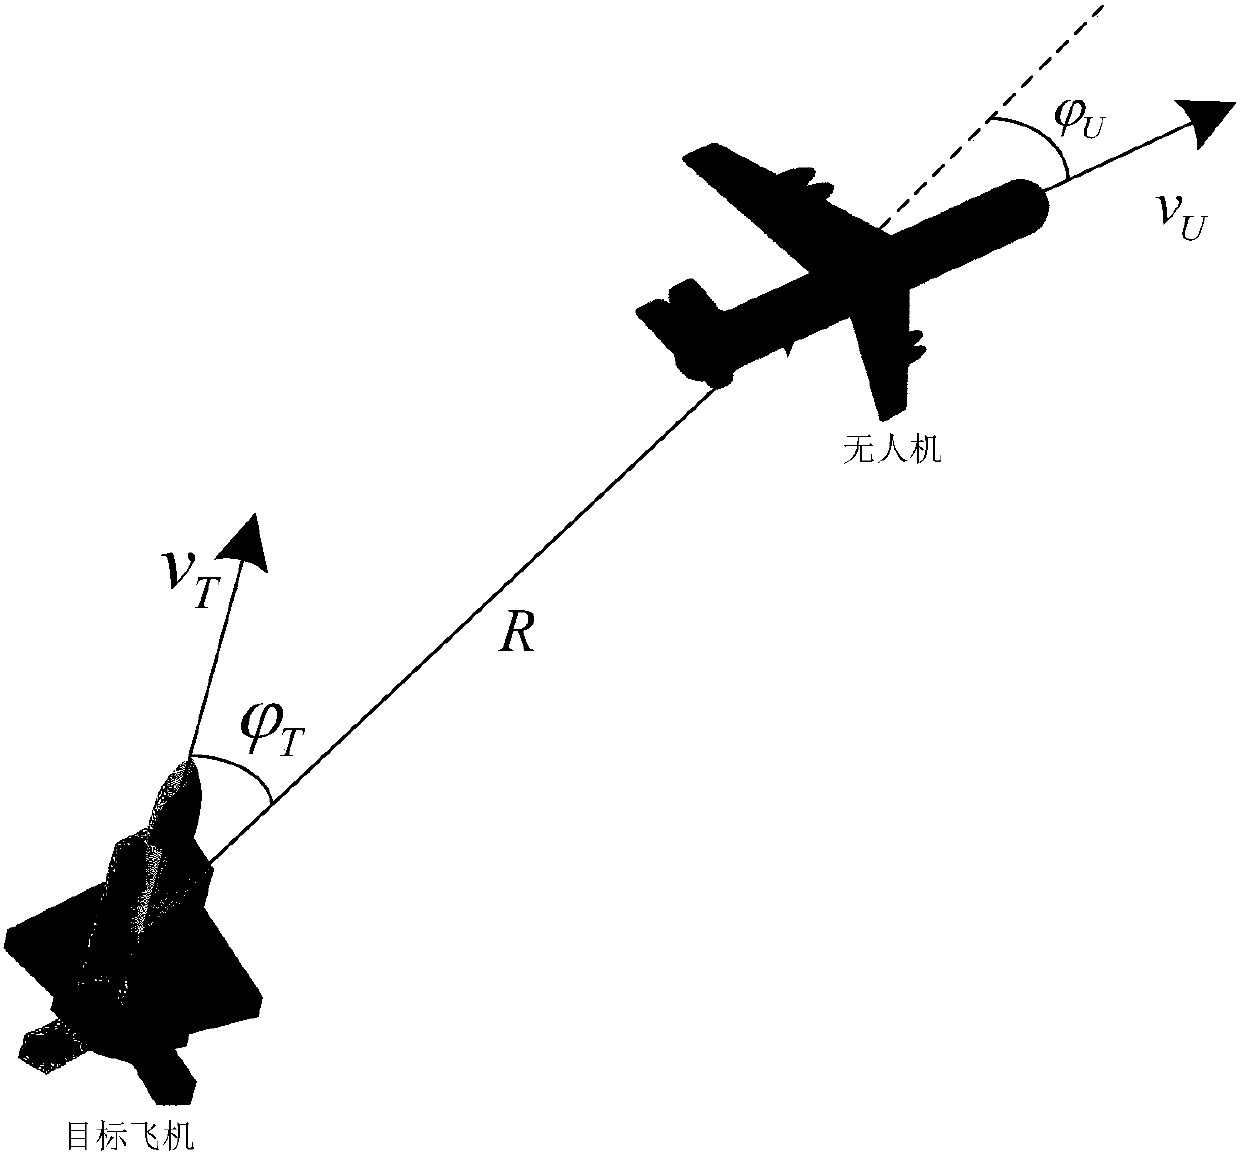 Reinforcement learning based air combat maneuver decision making method of unmanned aerial vehicle (UAV)